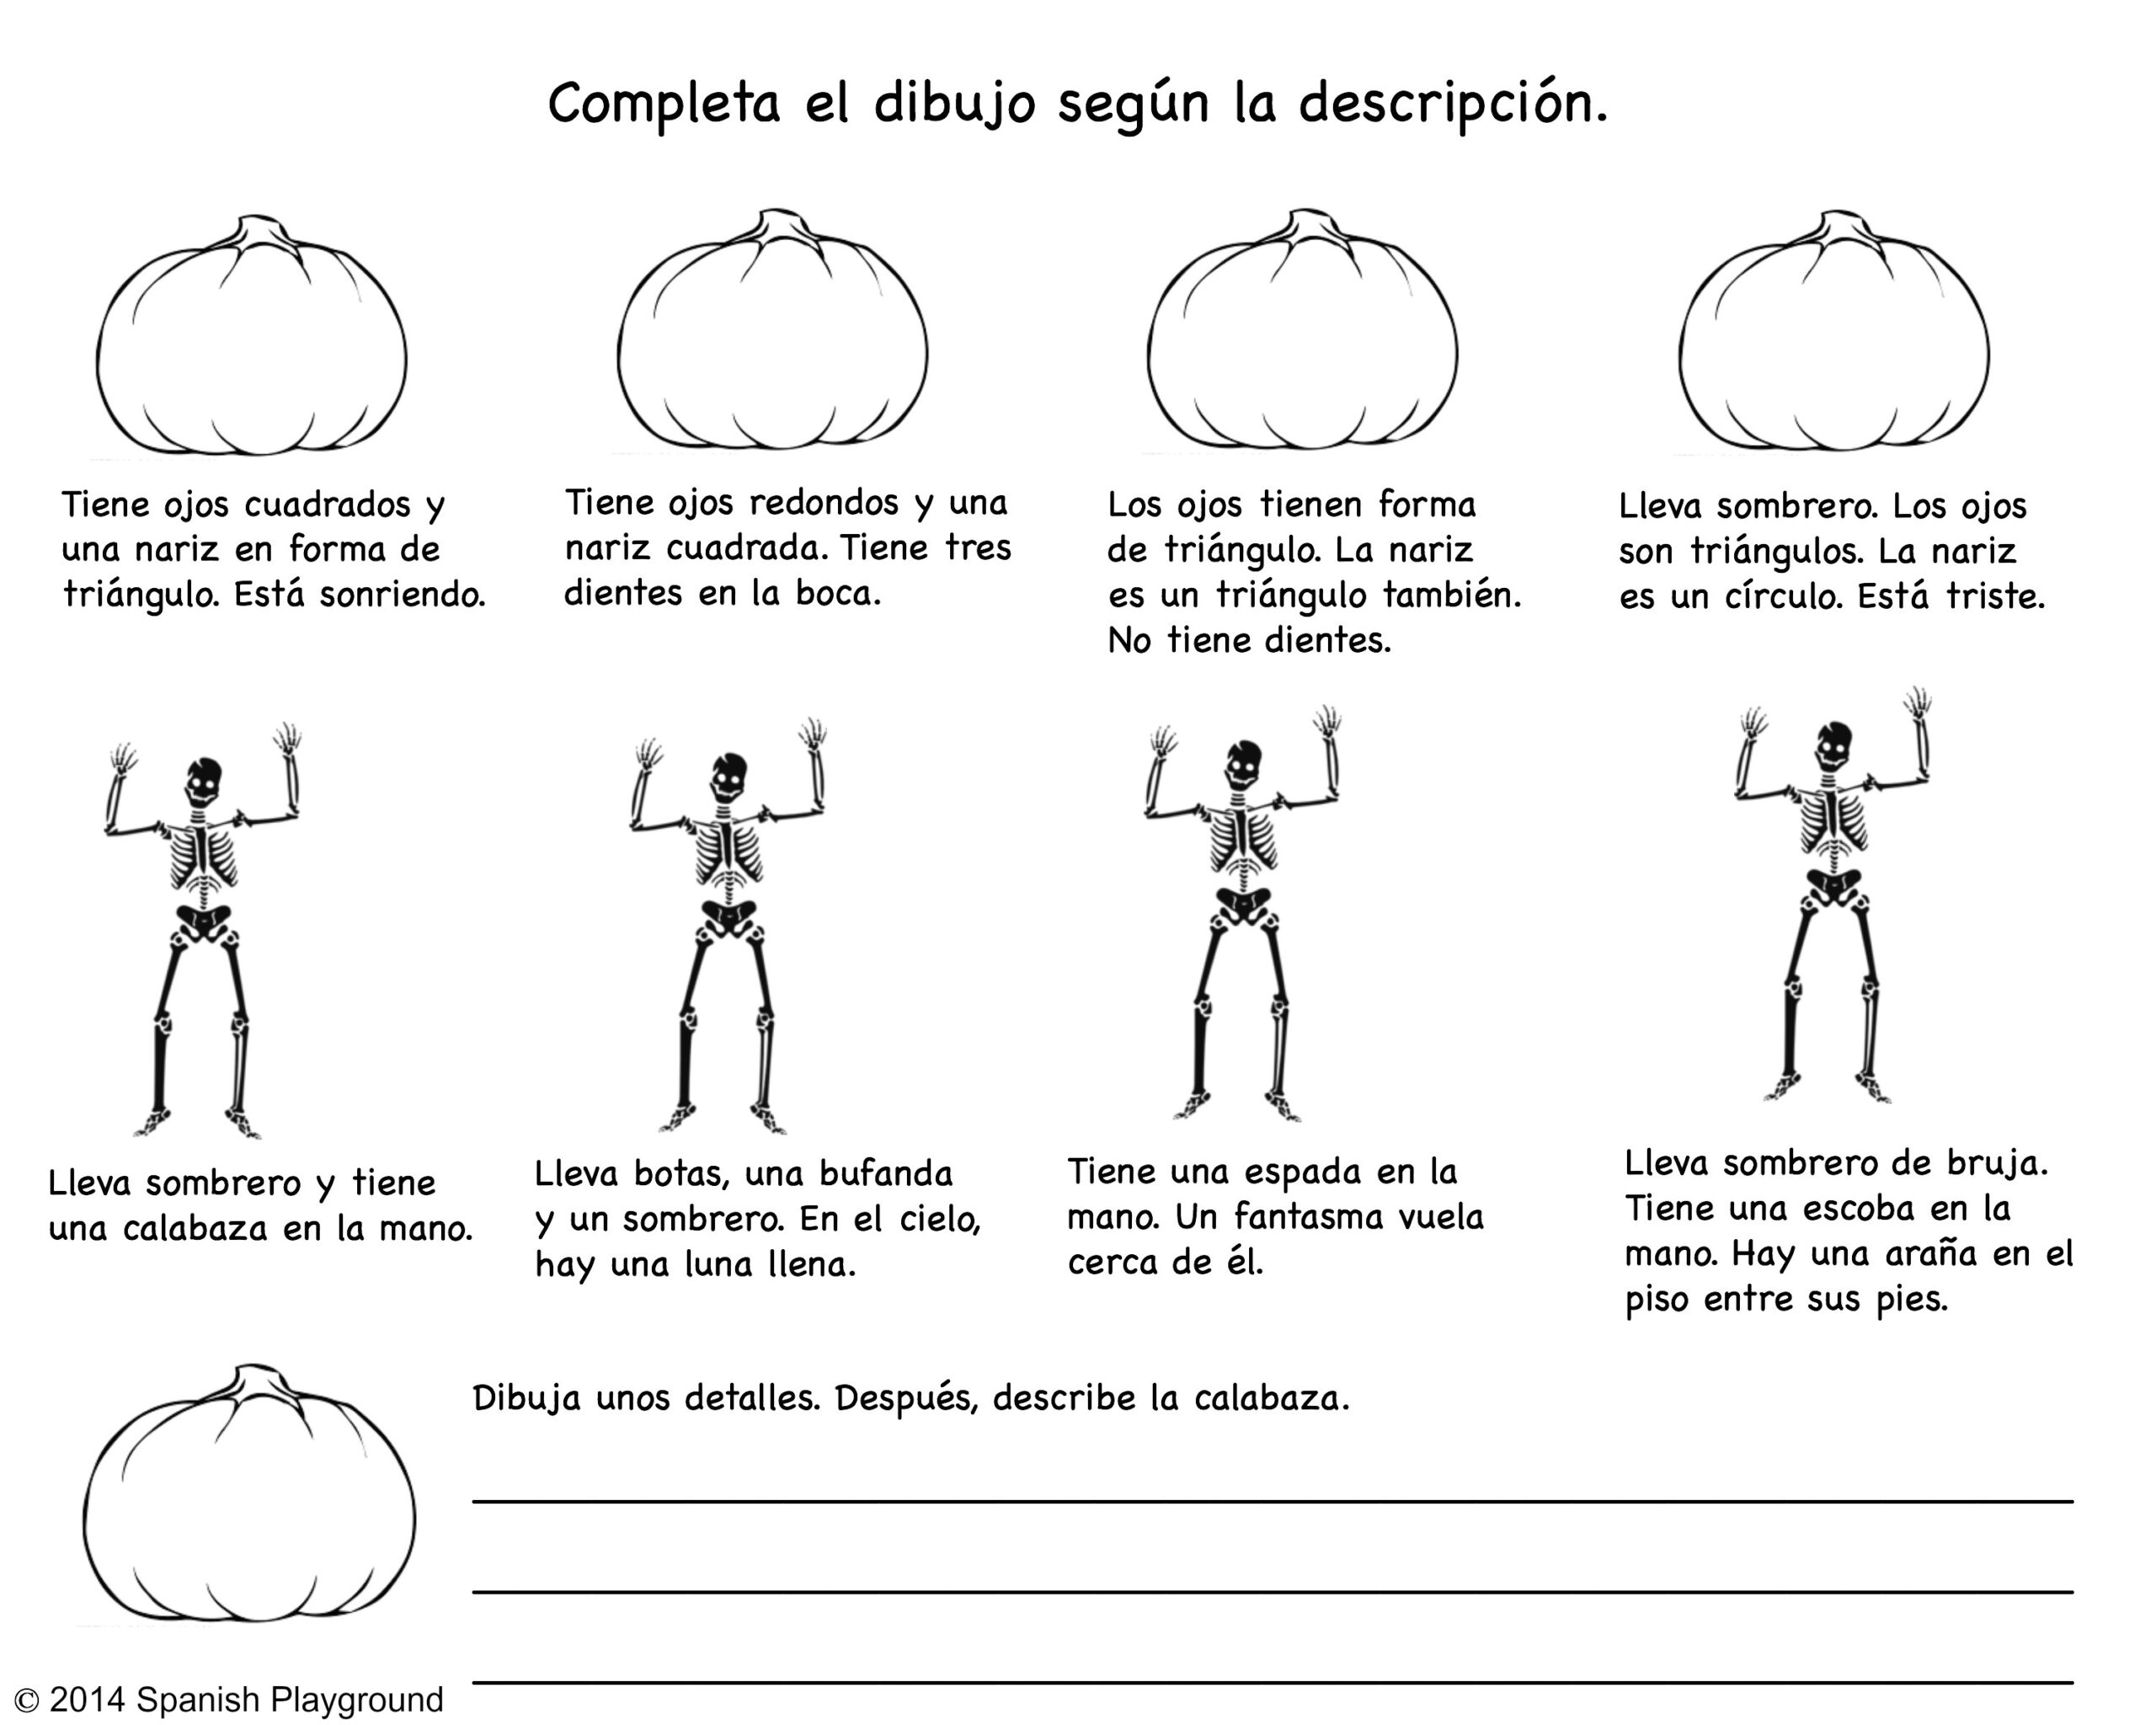 Spanish Halloween Read-And-Draw Printable - Spanish Playground